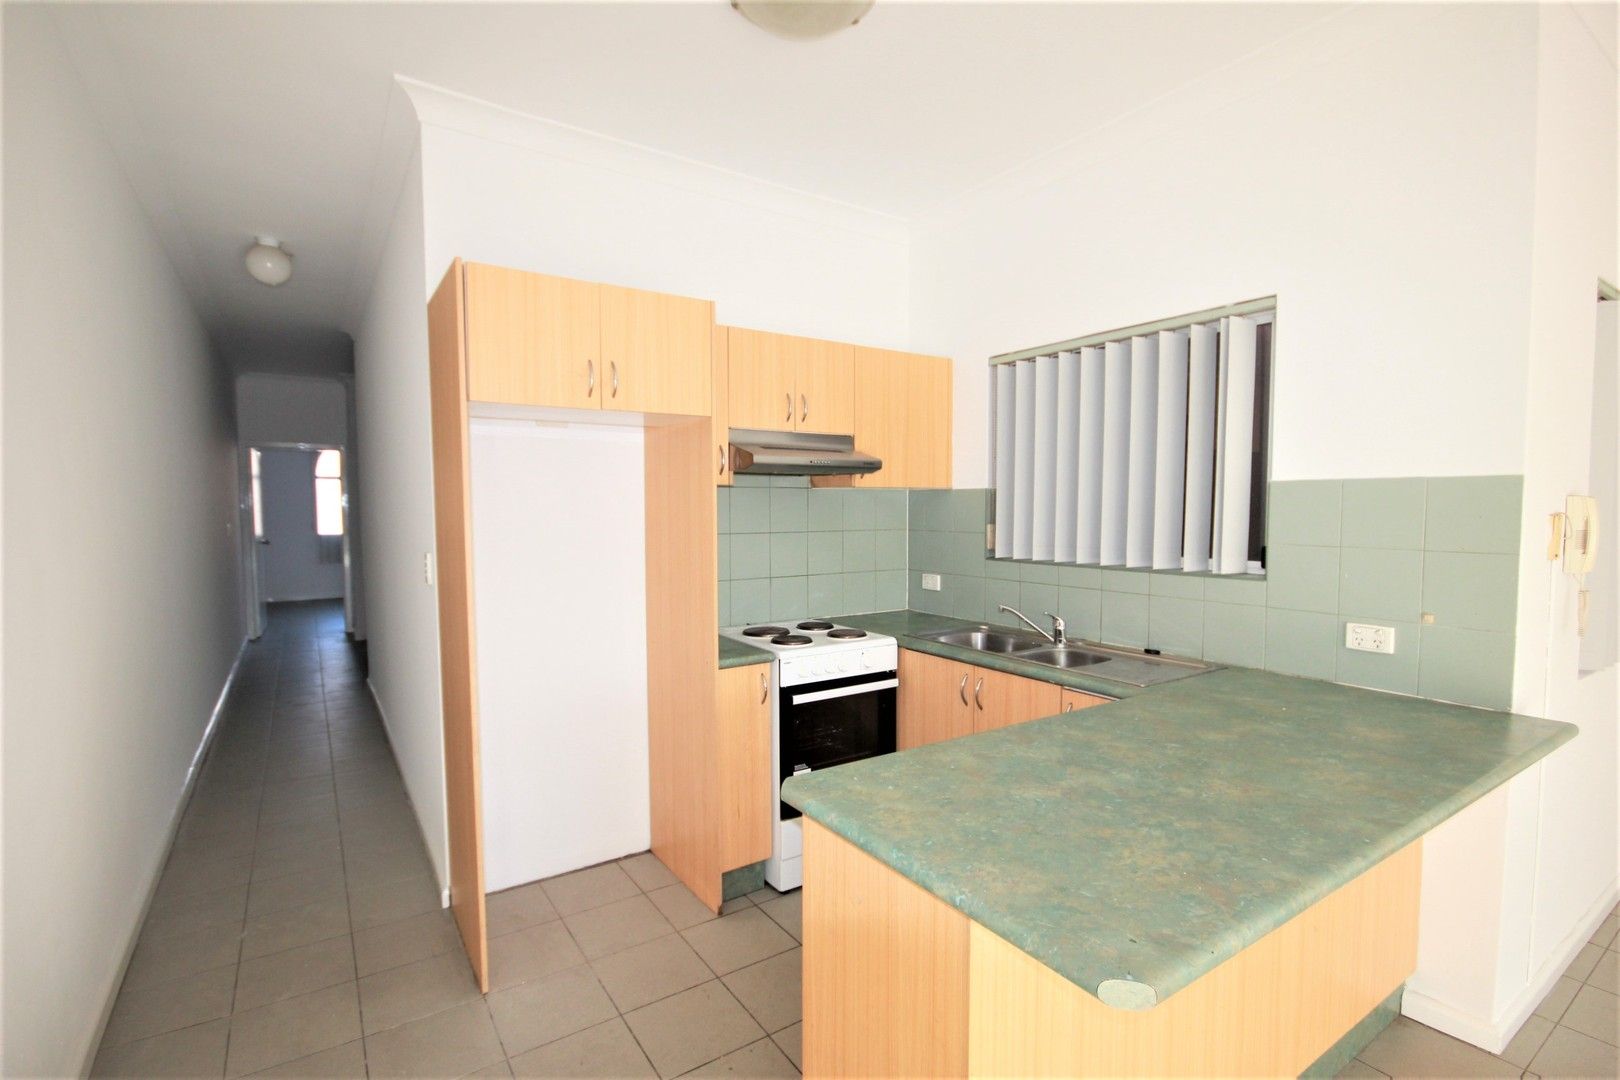 2 bedrooms House in 1/389 Burwood Road BELMORE NSW, 2192